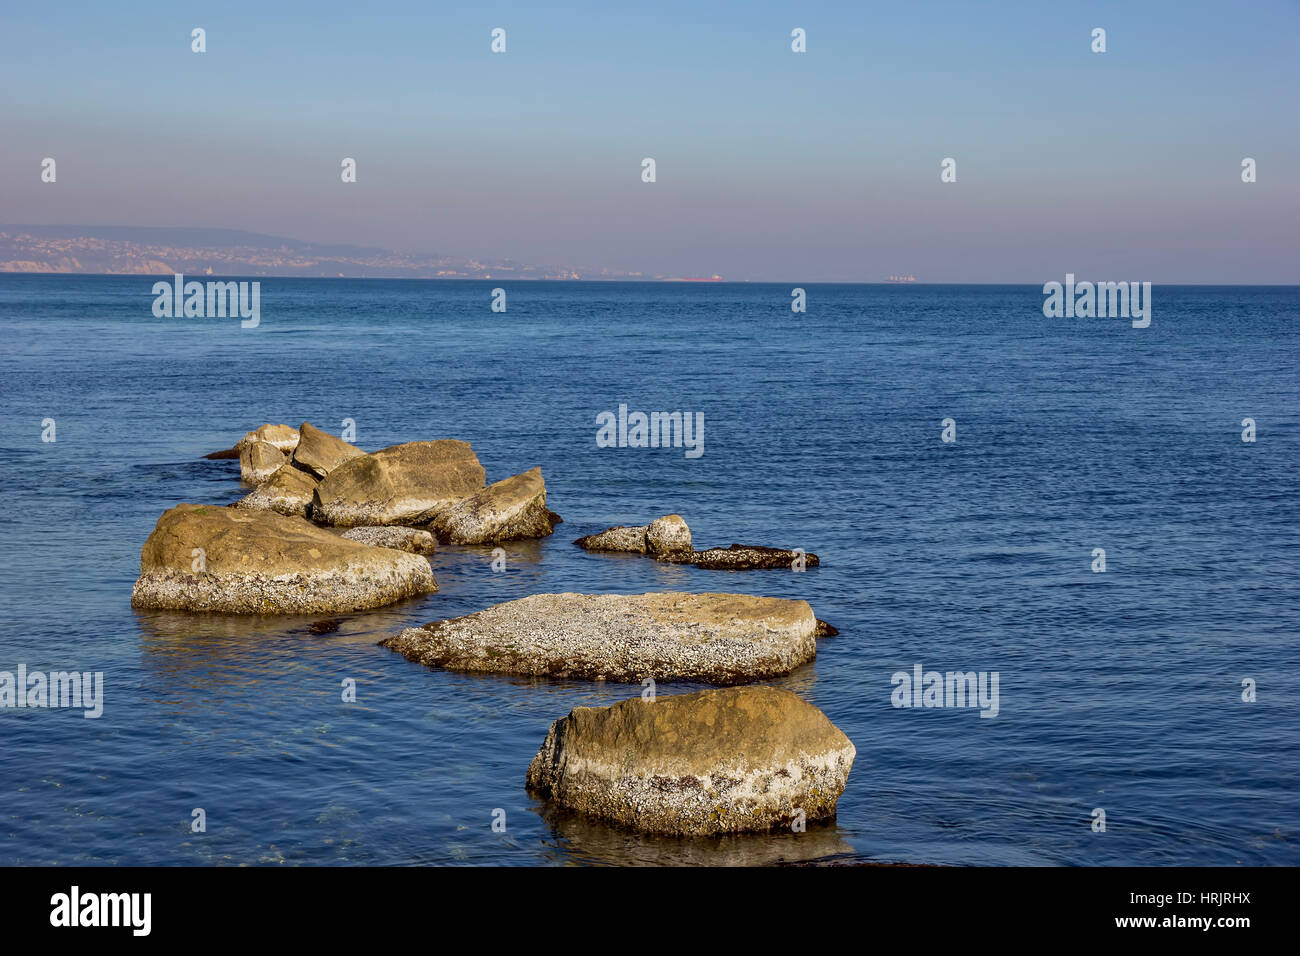 Beauty day view of sea rocks with algae Stock Photo